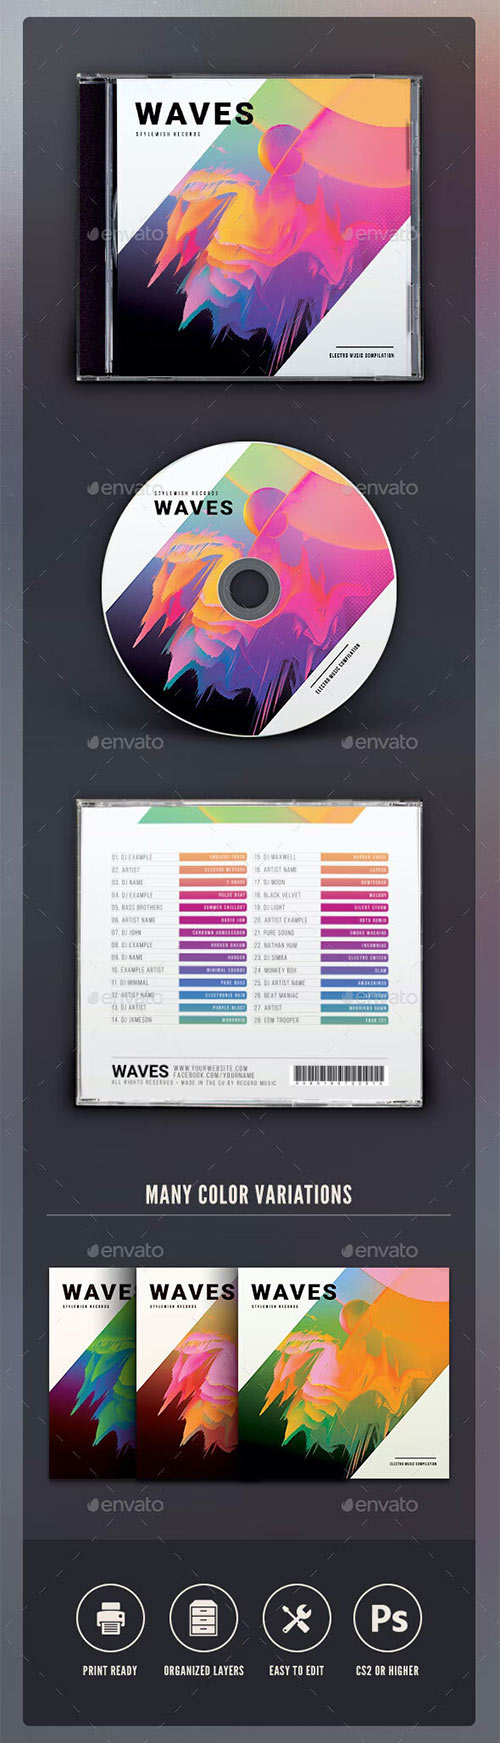 Waves CD Cover Artwork 34444435